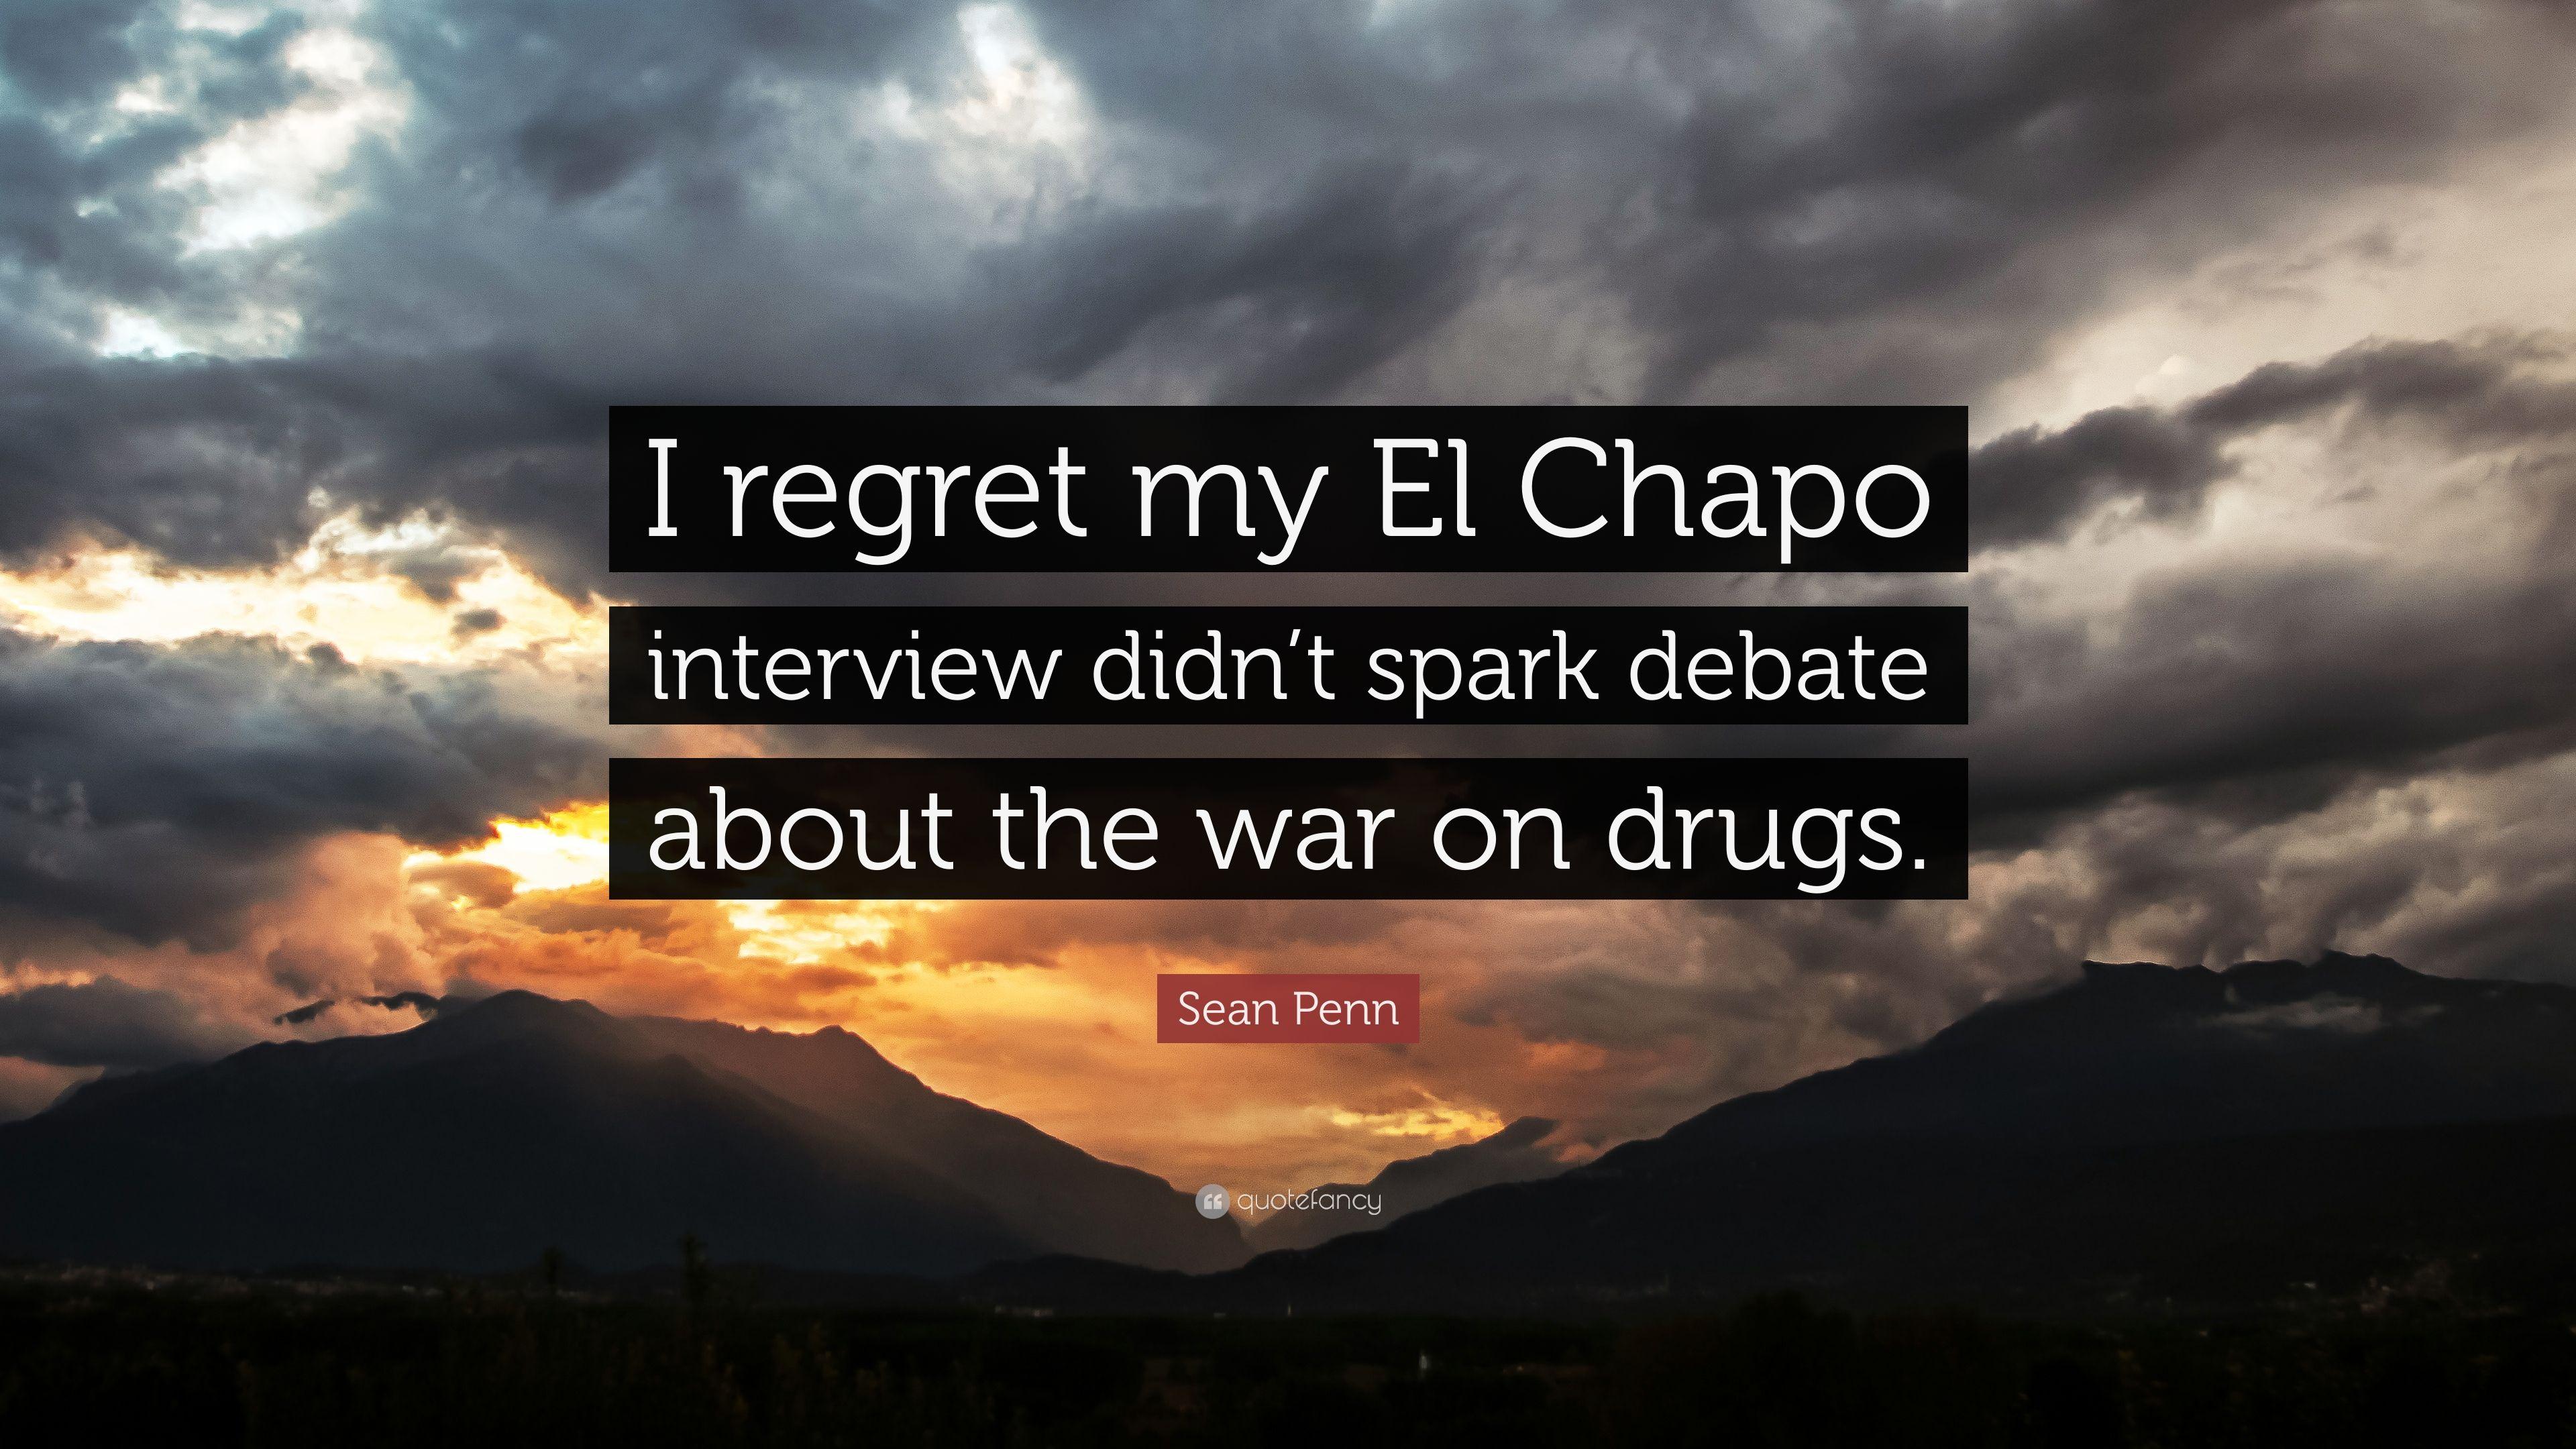 Sean Penn Quote: “I regret my El Chapo interview didn't spark